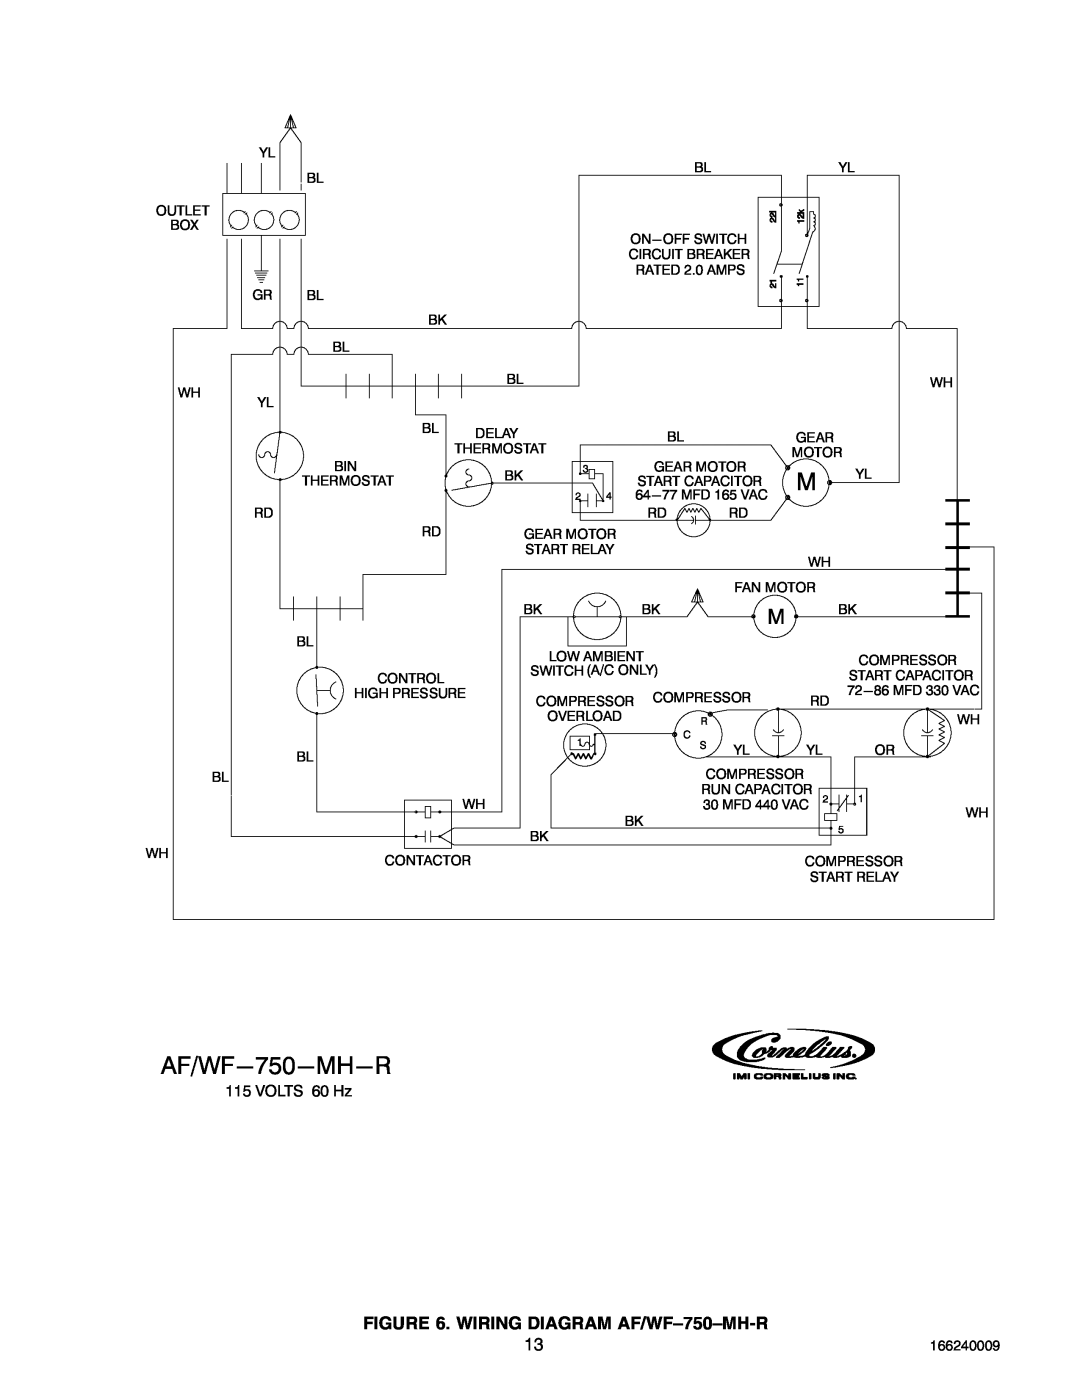 Cornelius SERIES 1100 (R22), 750 (R404A), 2400 (R404A) service manual WIRING DIAGRAM AF/WF-750-MH-R, VOLTS 60 Hz 